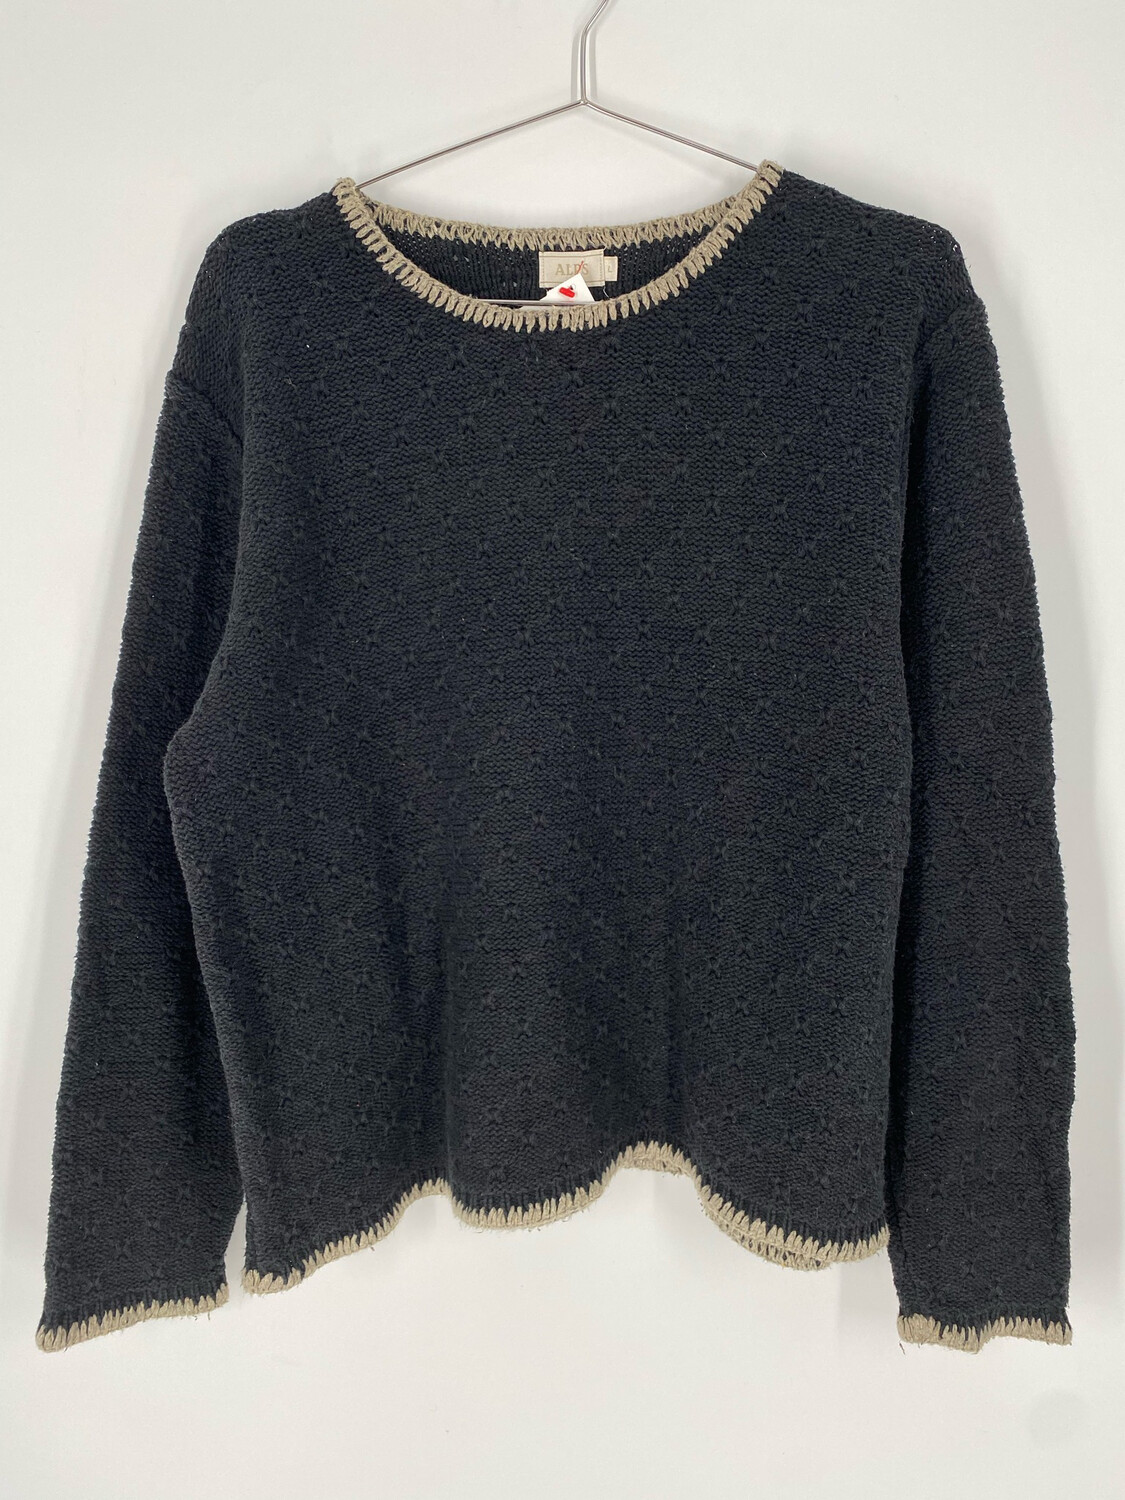 ALPS Grey Knit Sweater Size L